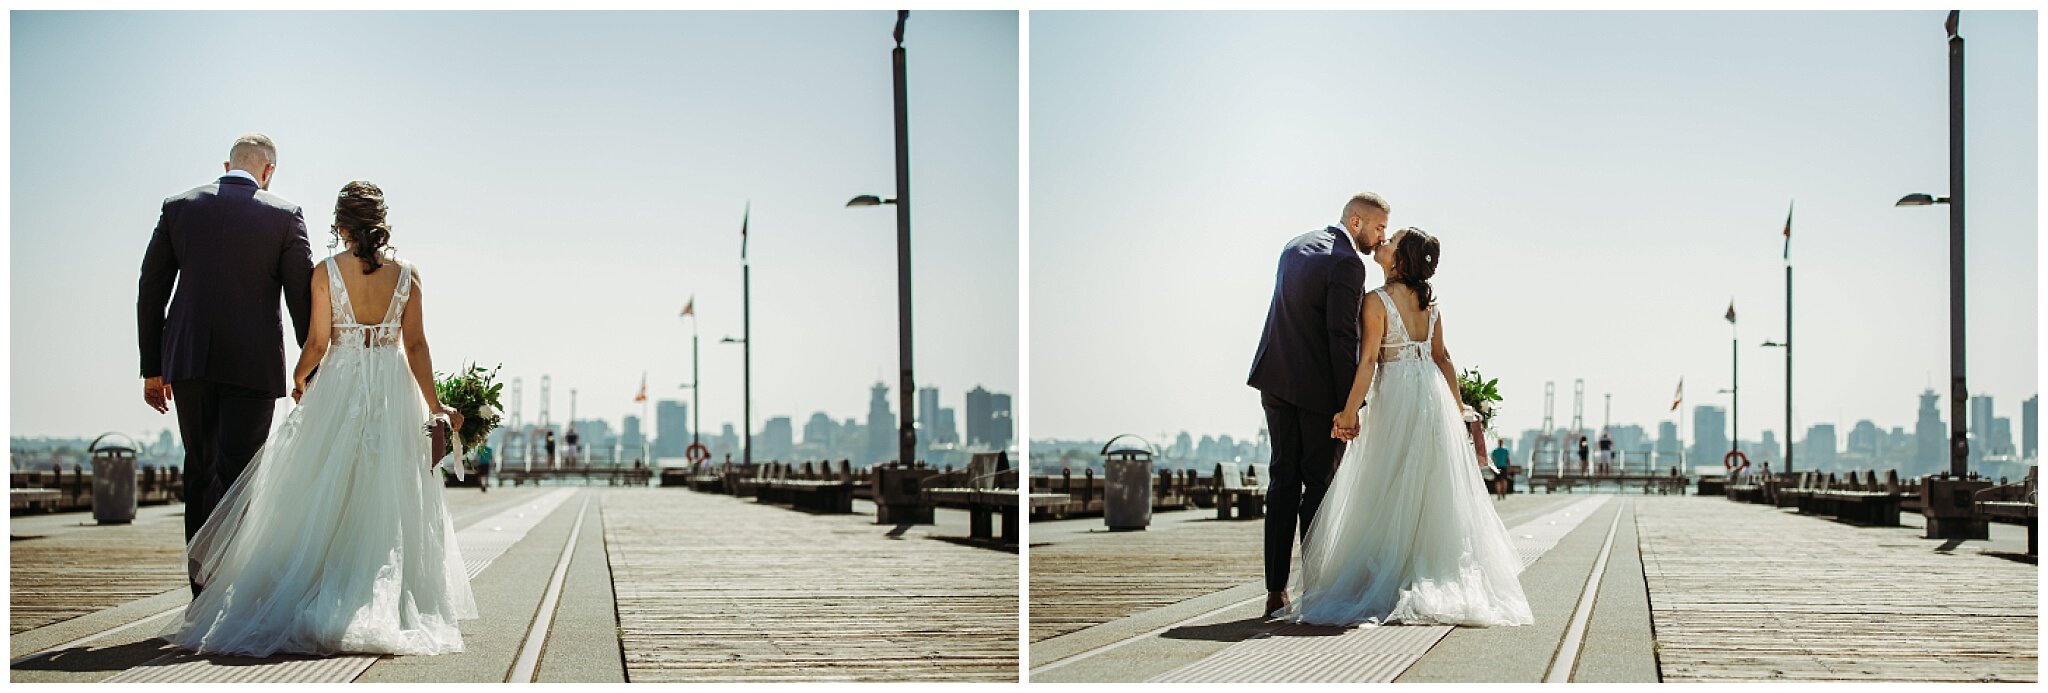 VANCOUVER-WEDDING-PHOTOGRAPHER-PIPE-SHOP-10_VANCOUVER-WEDDING-PHOTOGRAPHER-PIPE-SHOP-.jpg